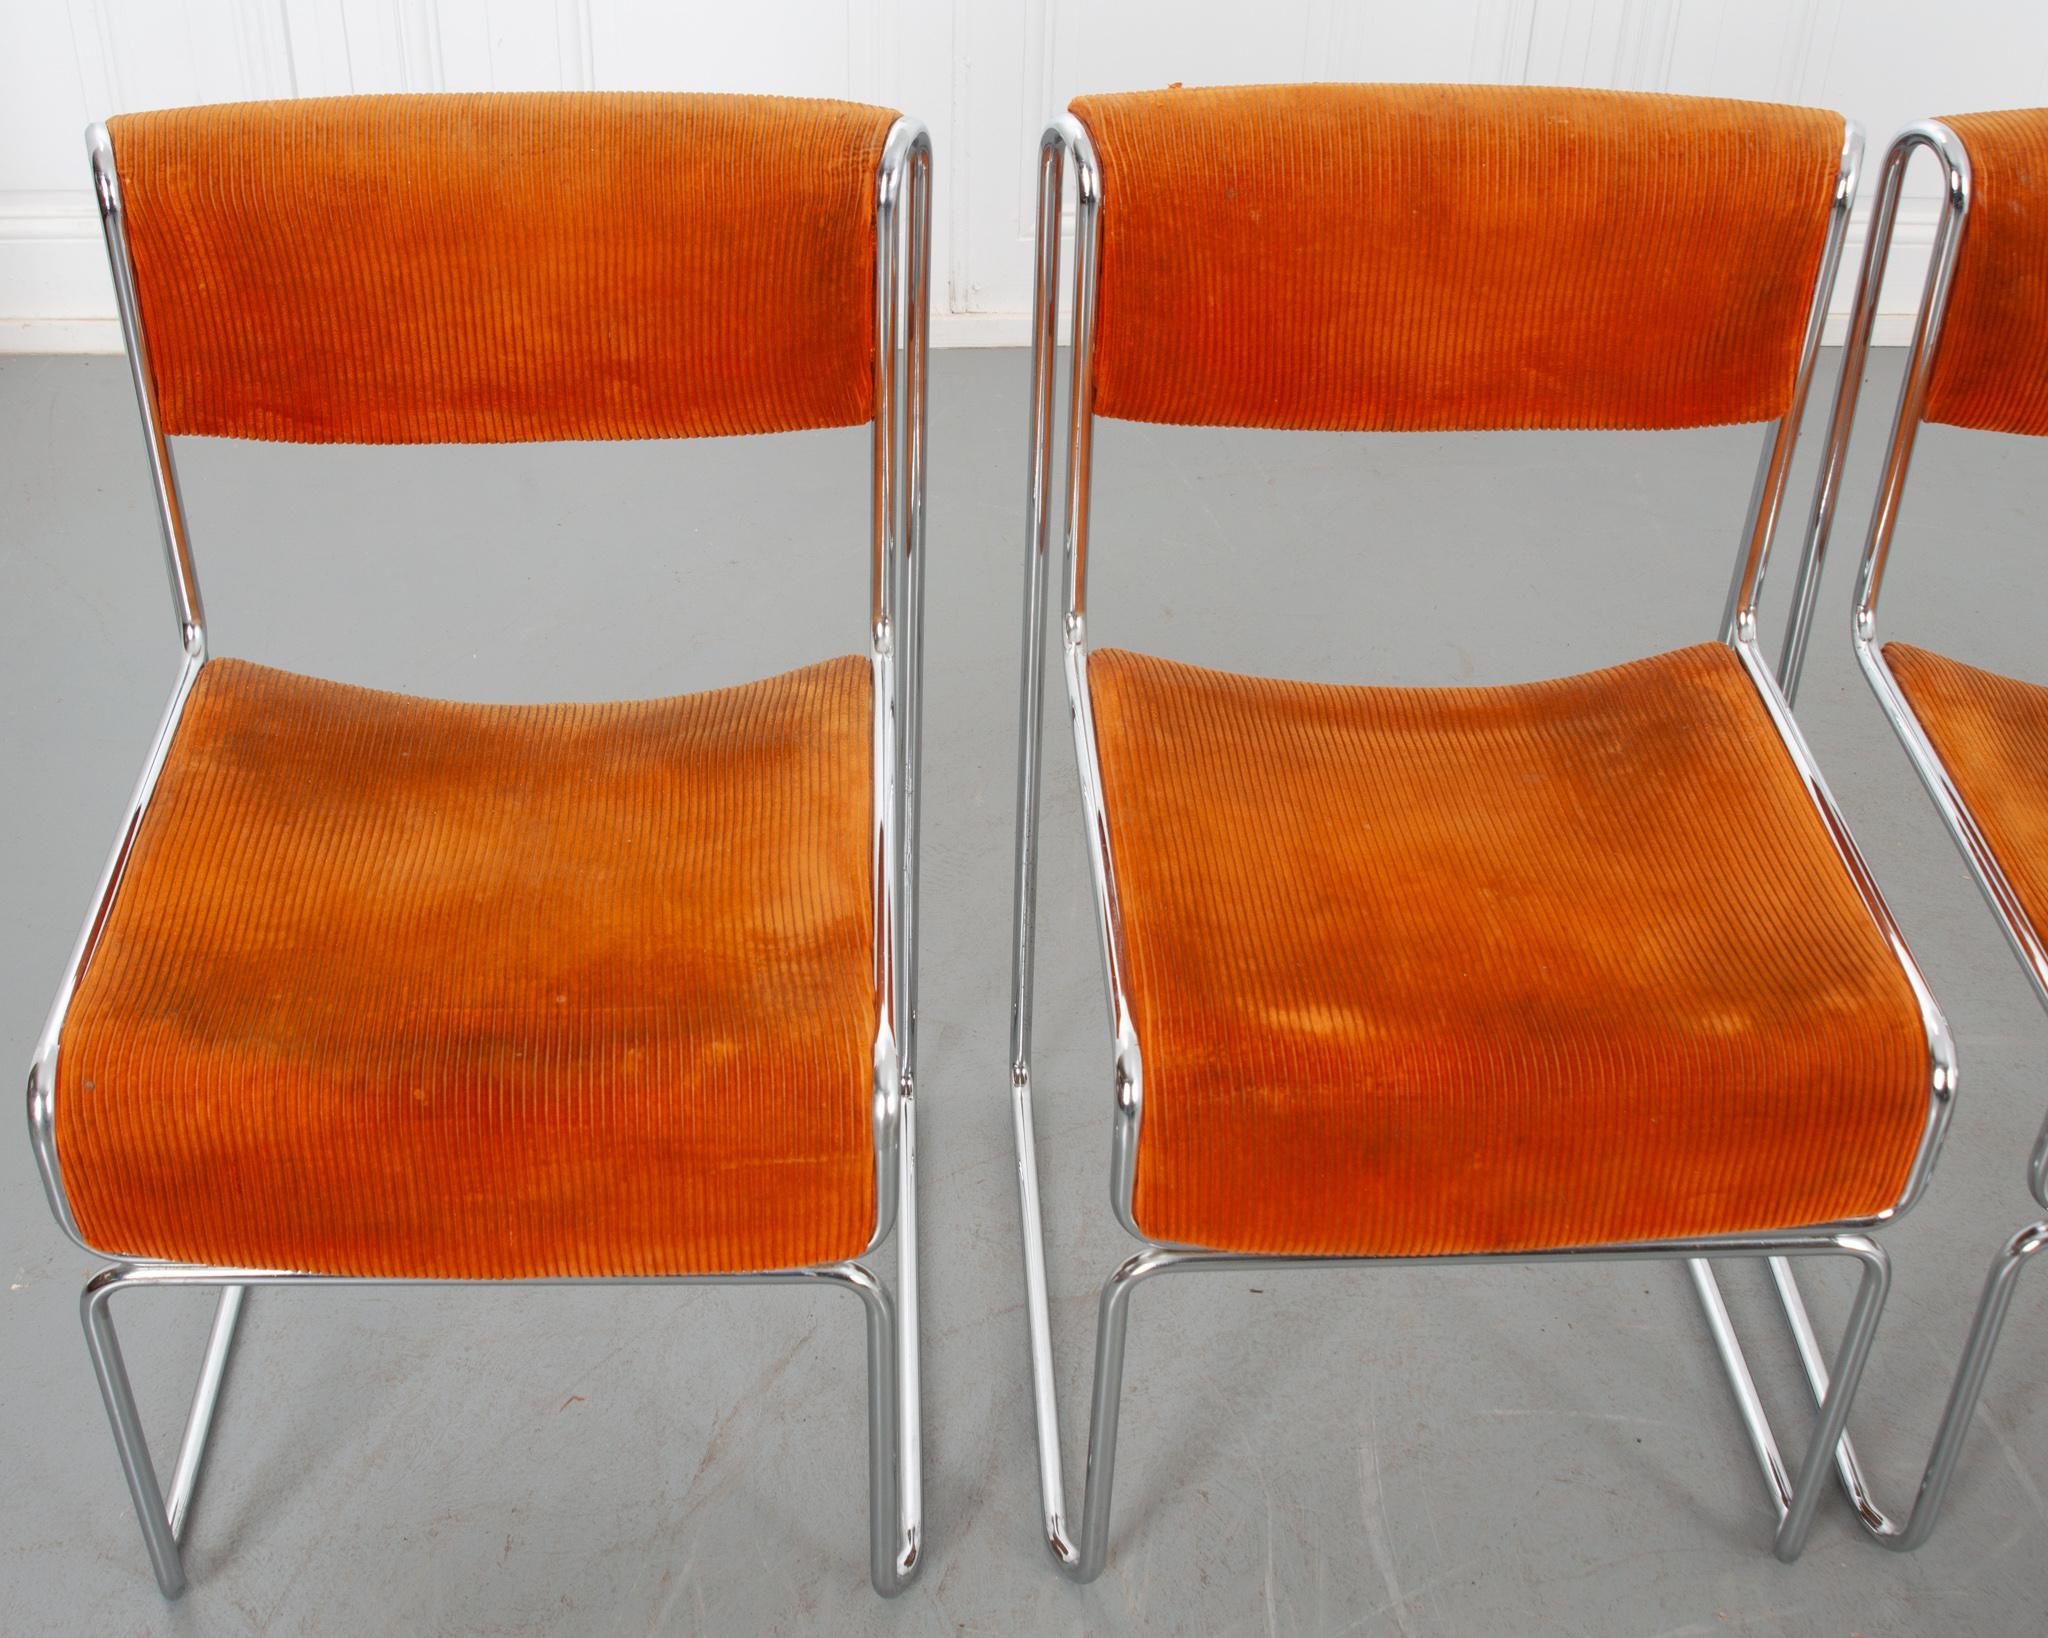 20th Century Set of 4 German Mid-Century Modern Dining Chairs